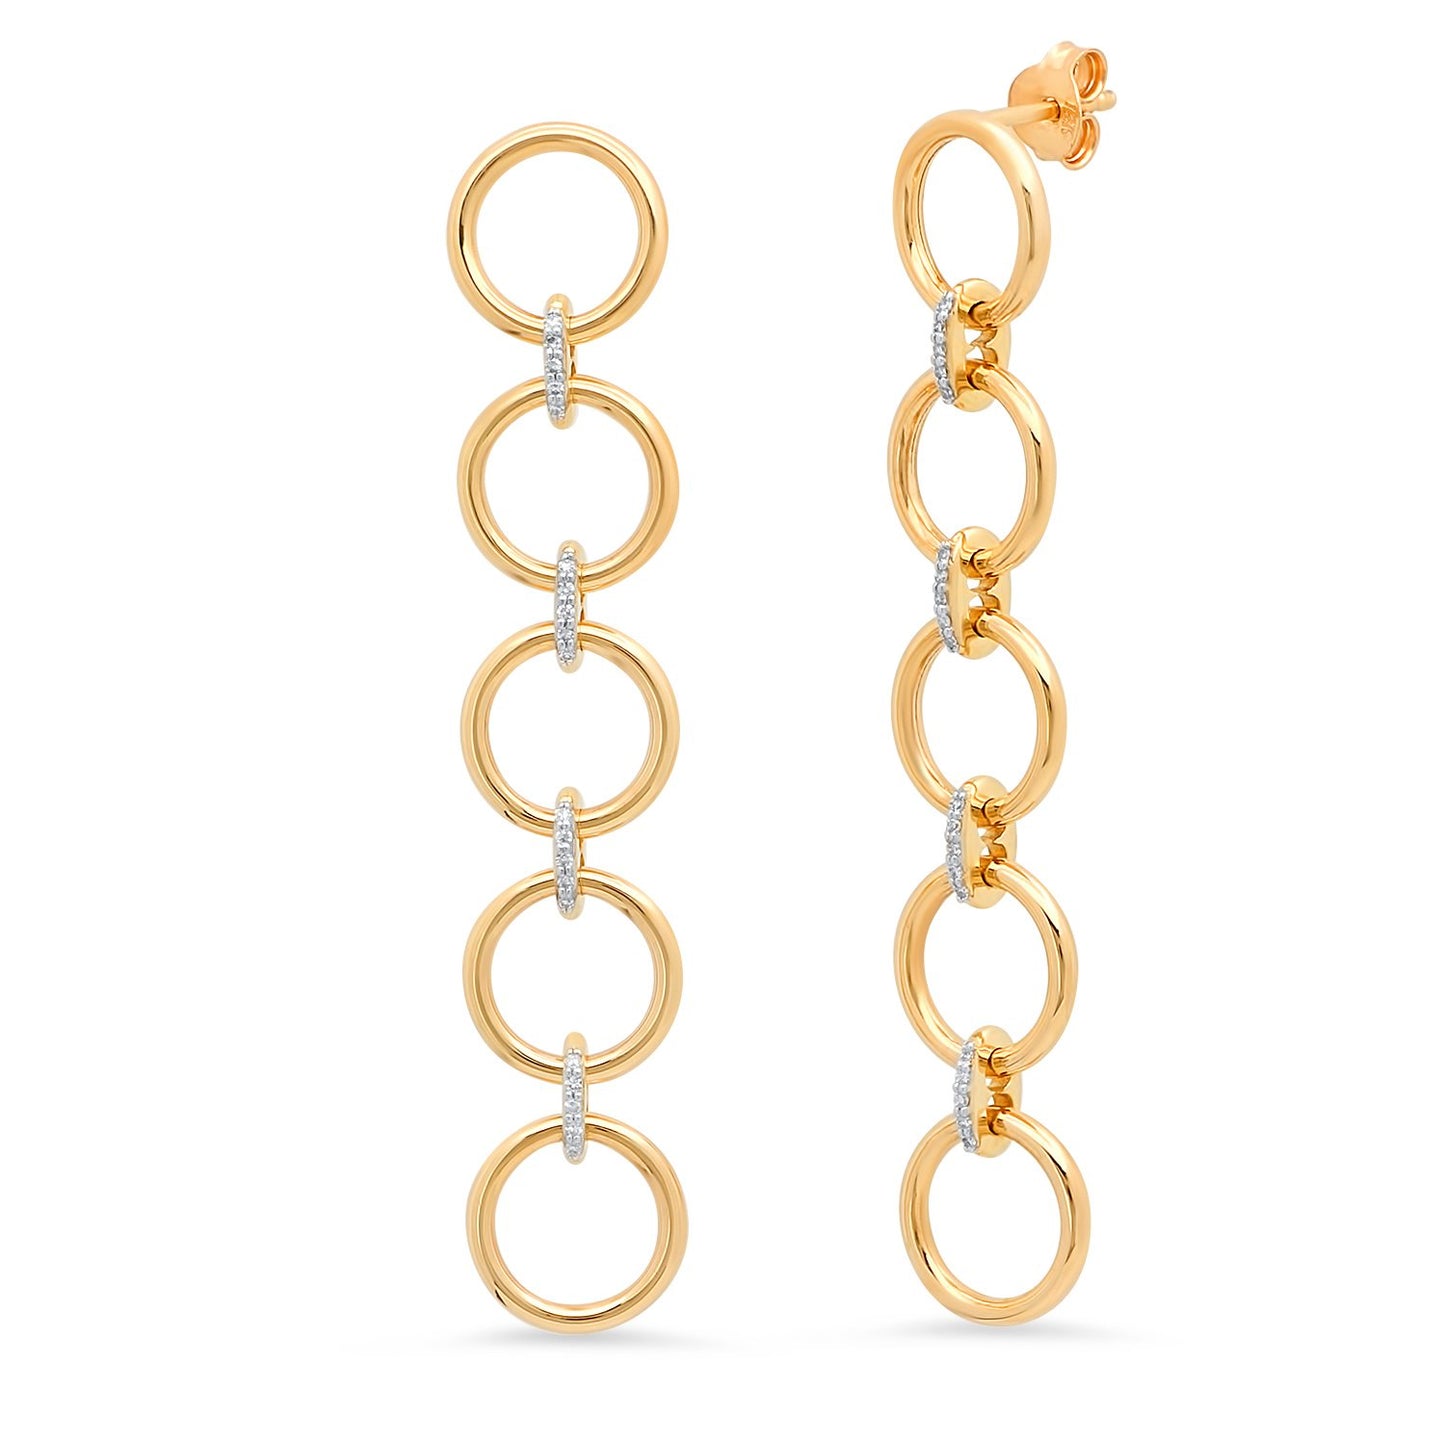 14K Yellow Gold Five Loop Earrings with Diamond Links